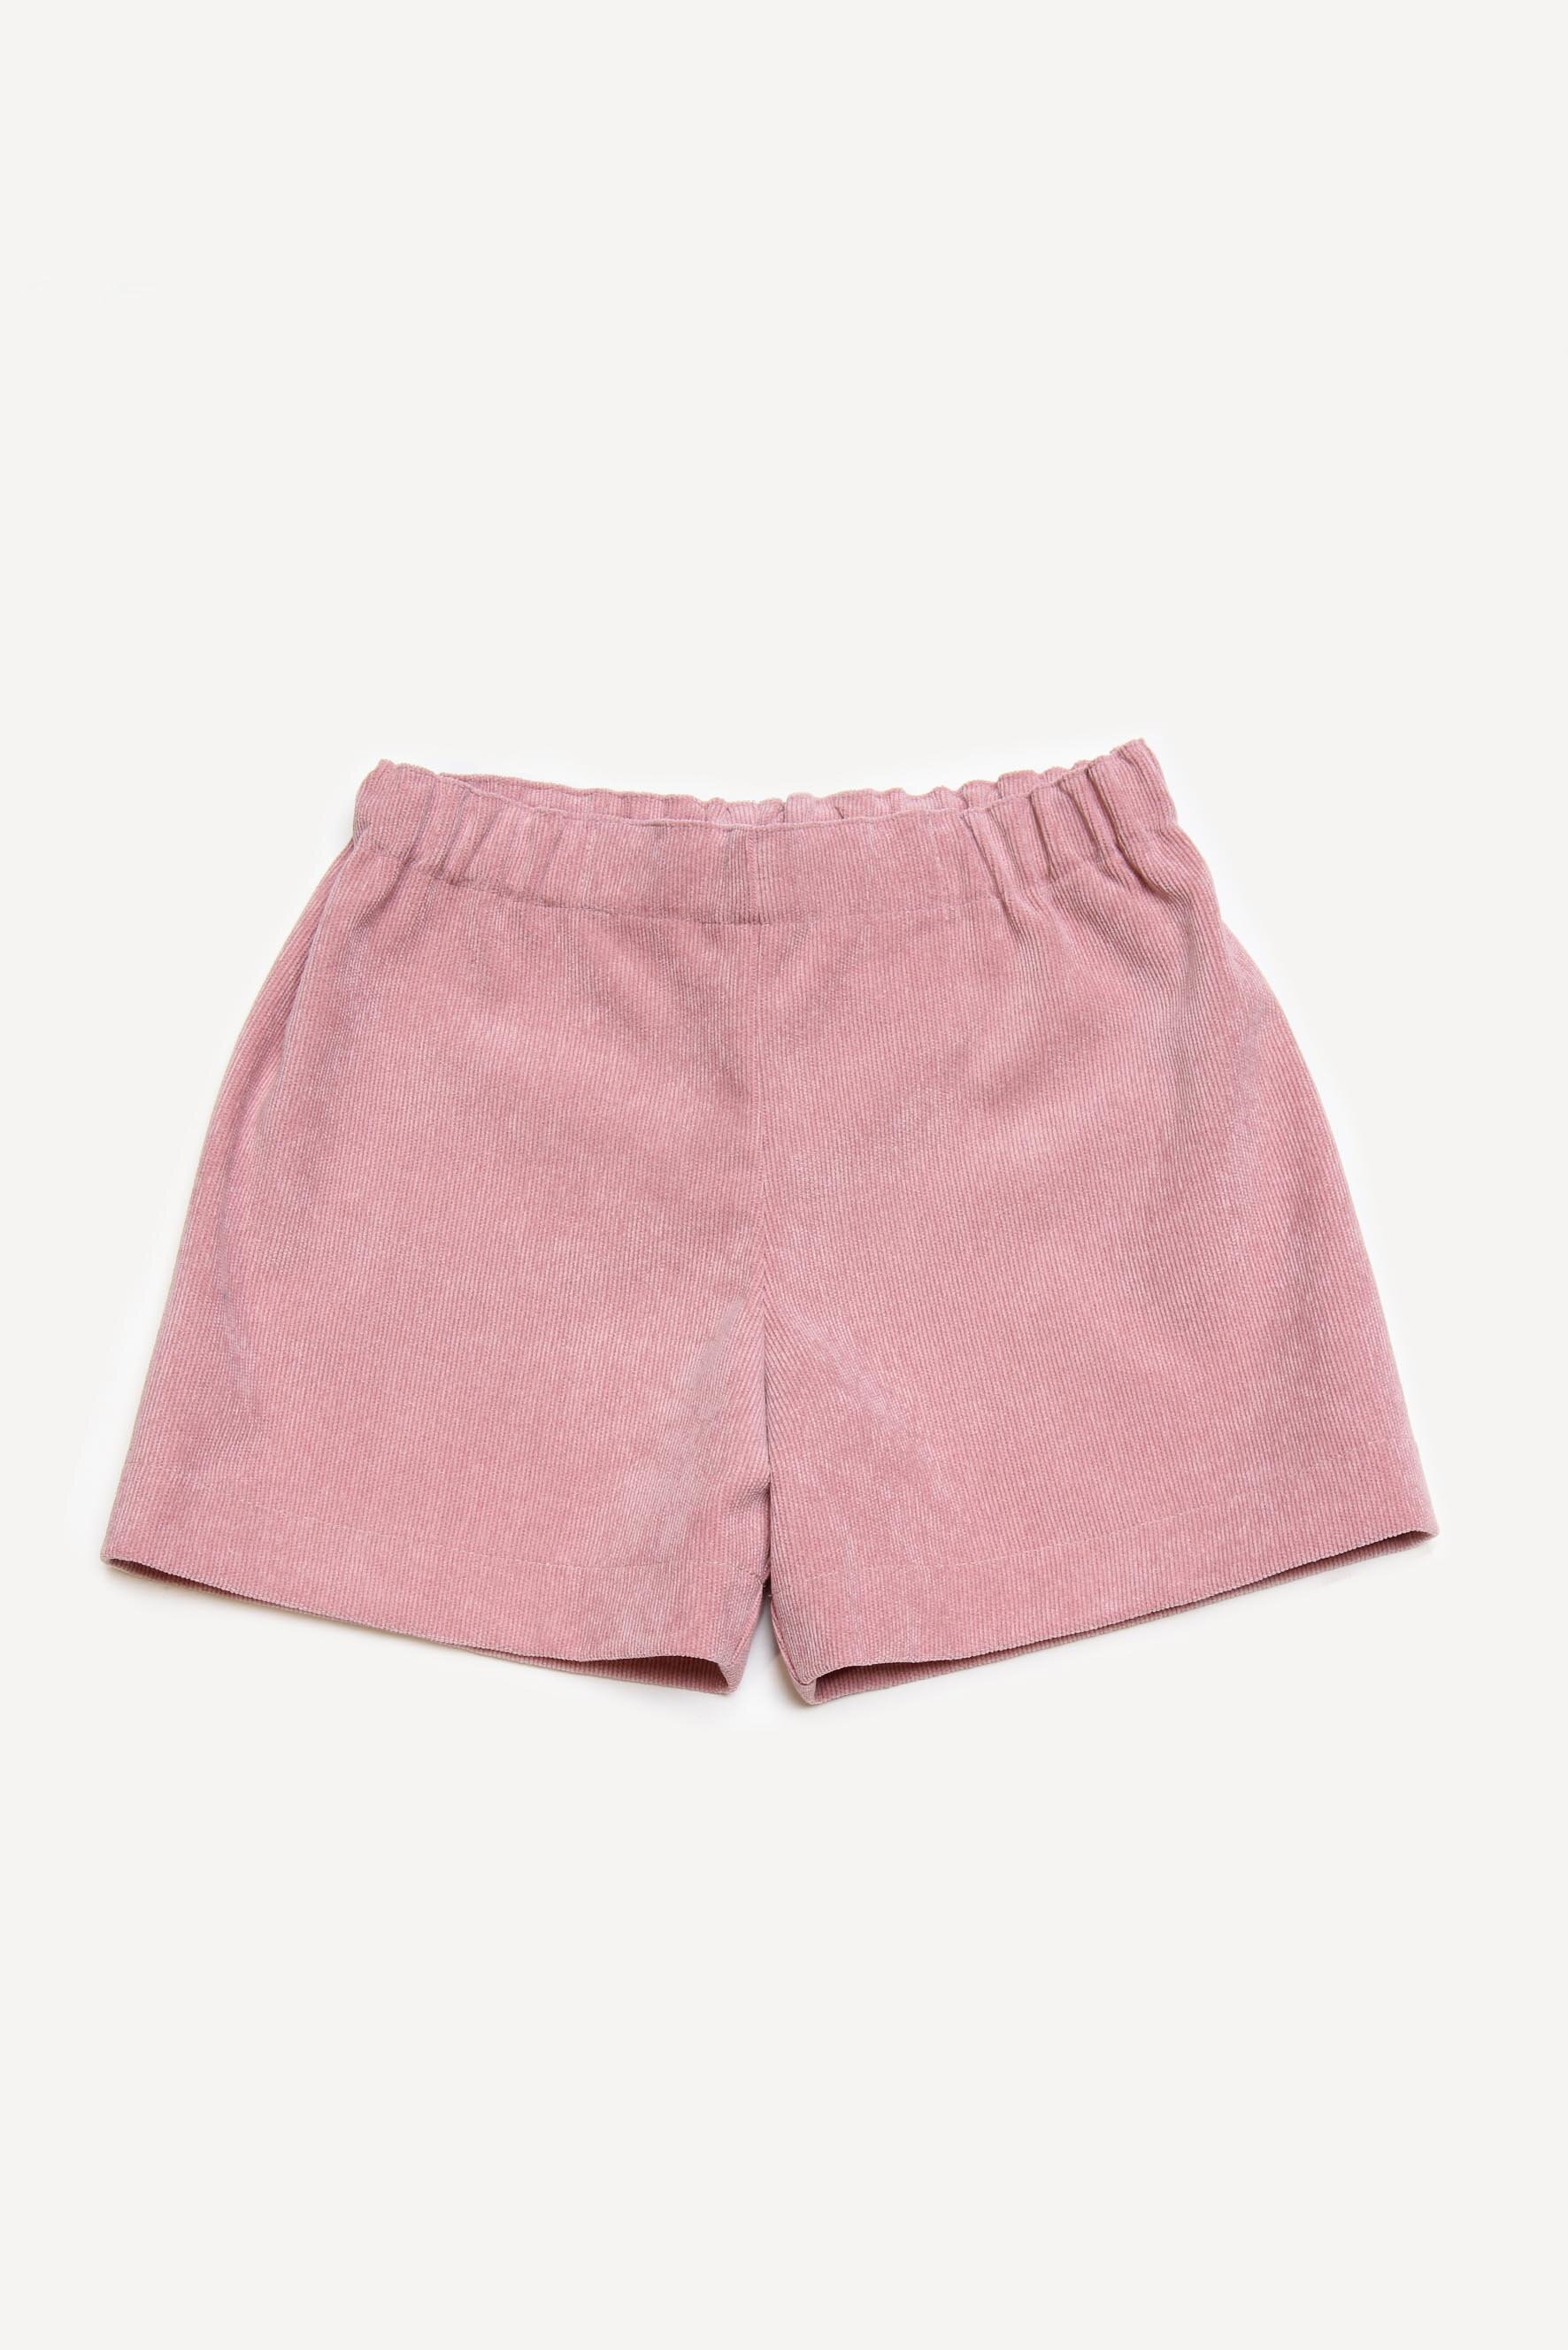 Pantaloncini bambina rosa antico